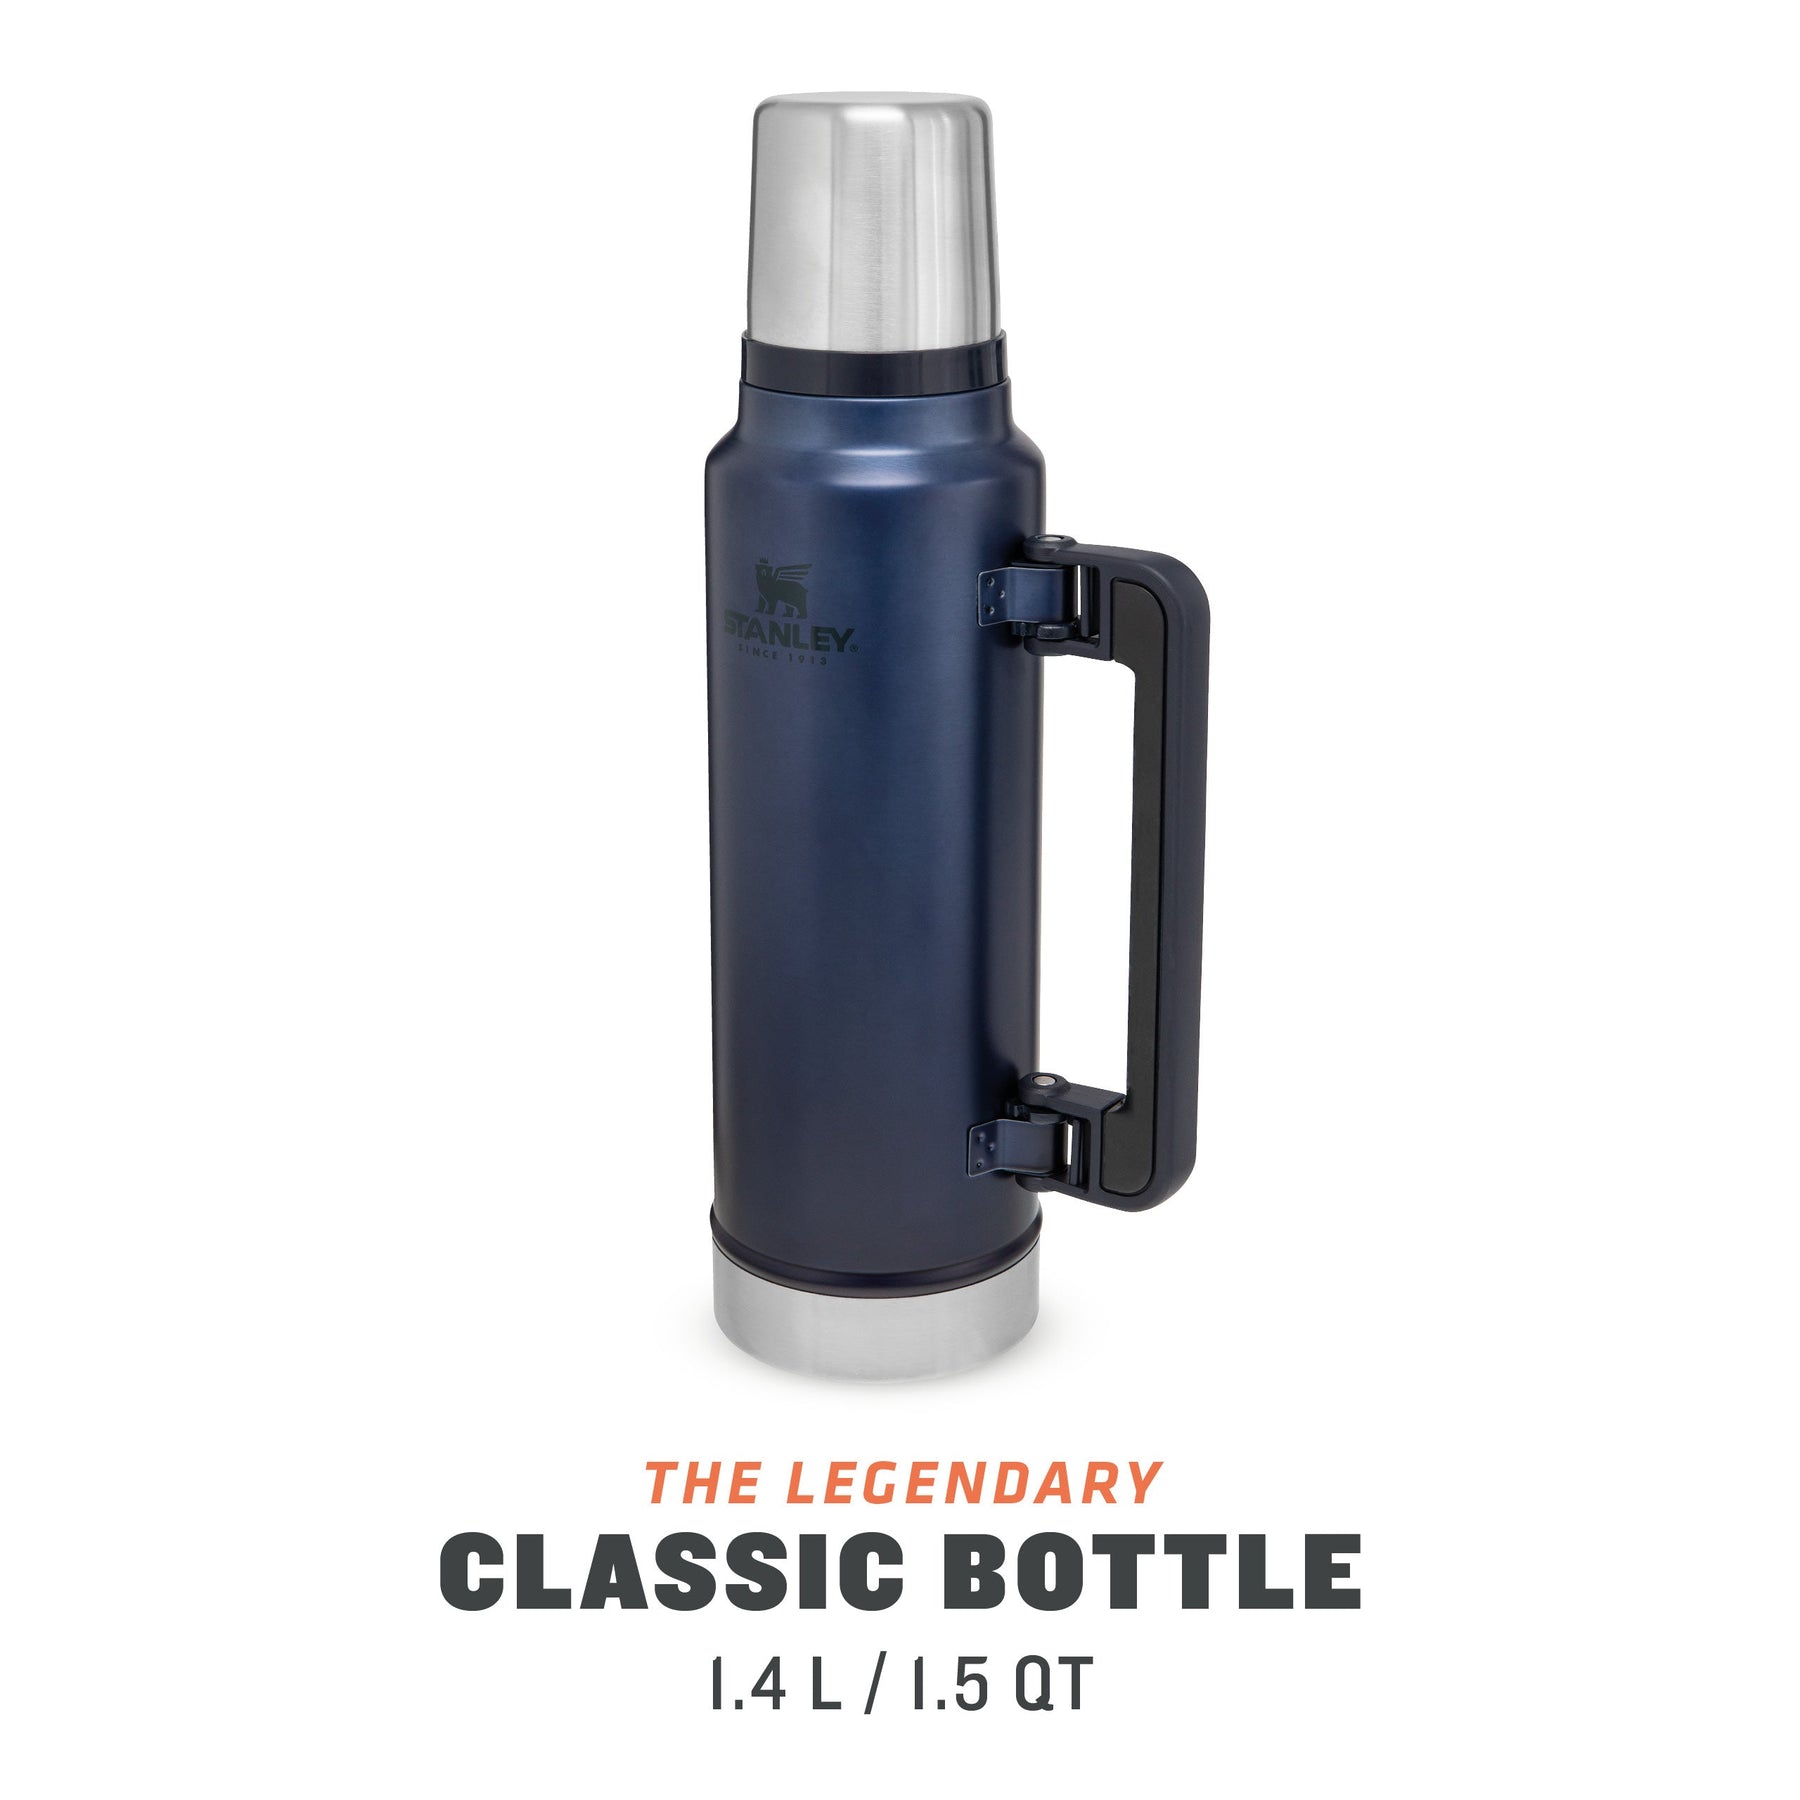 Stanley Classic Legendary Bottle | 1.5 qt, Bottomland